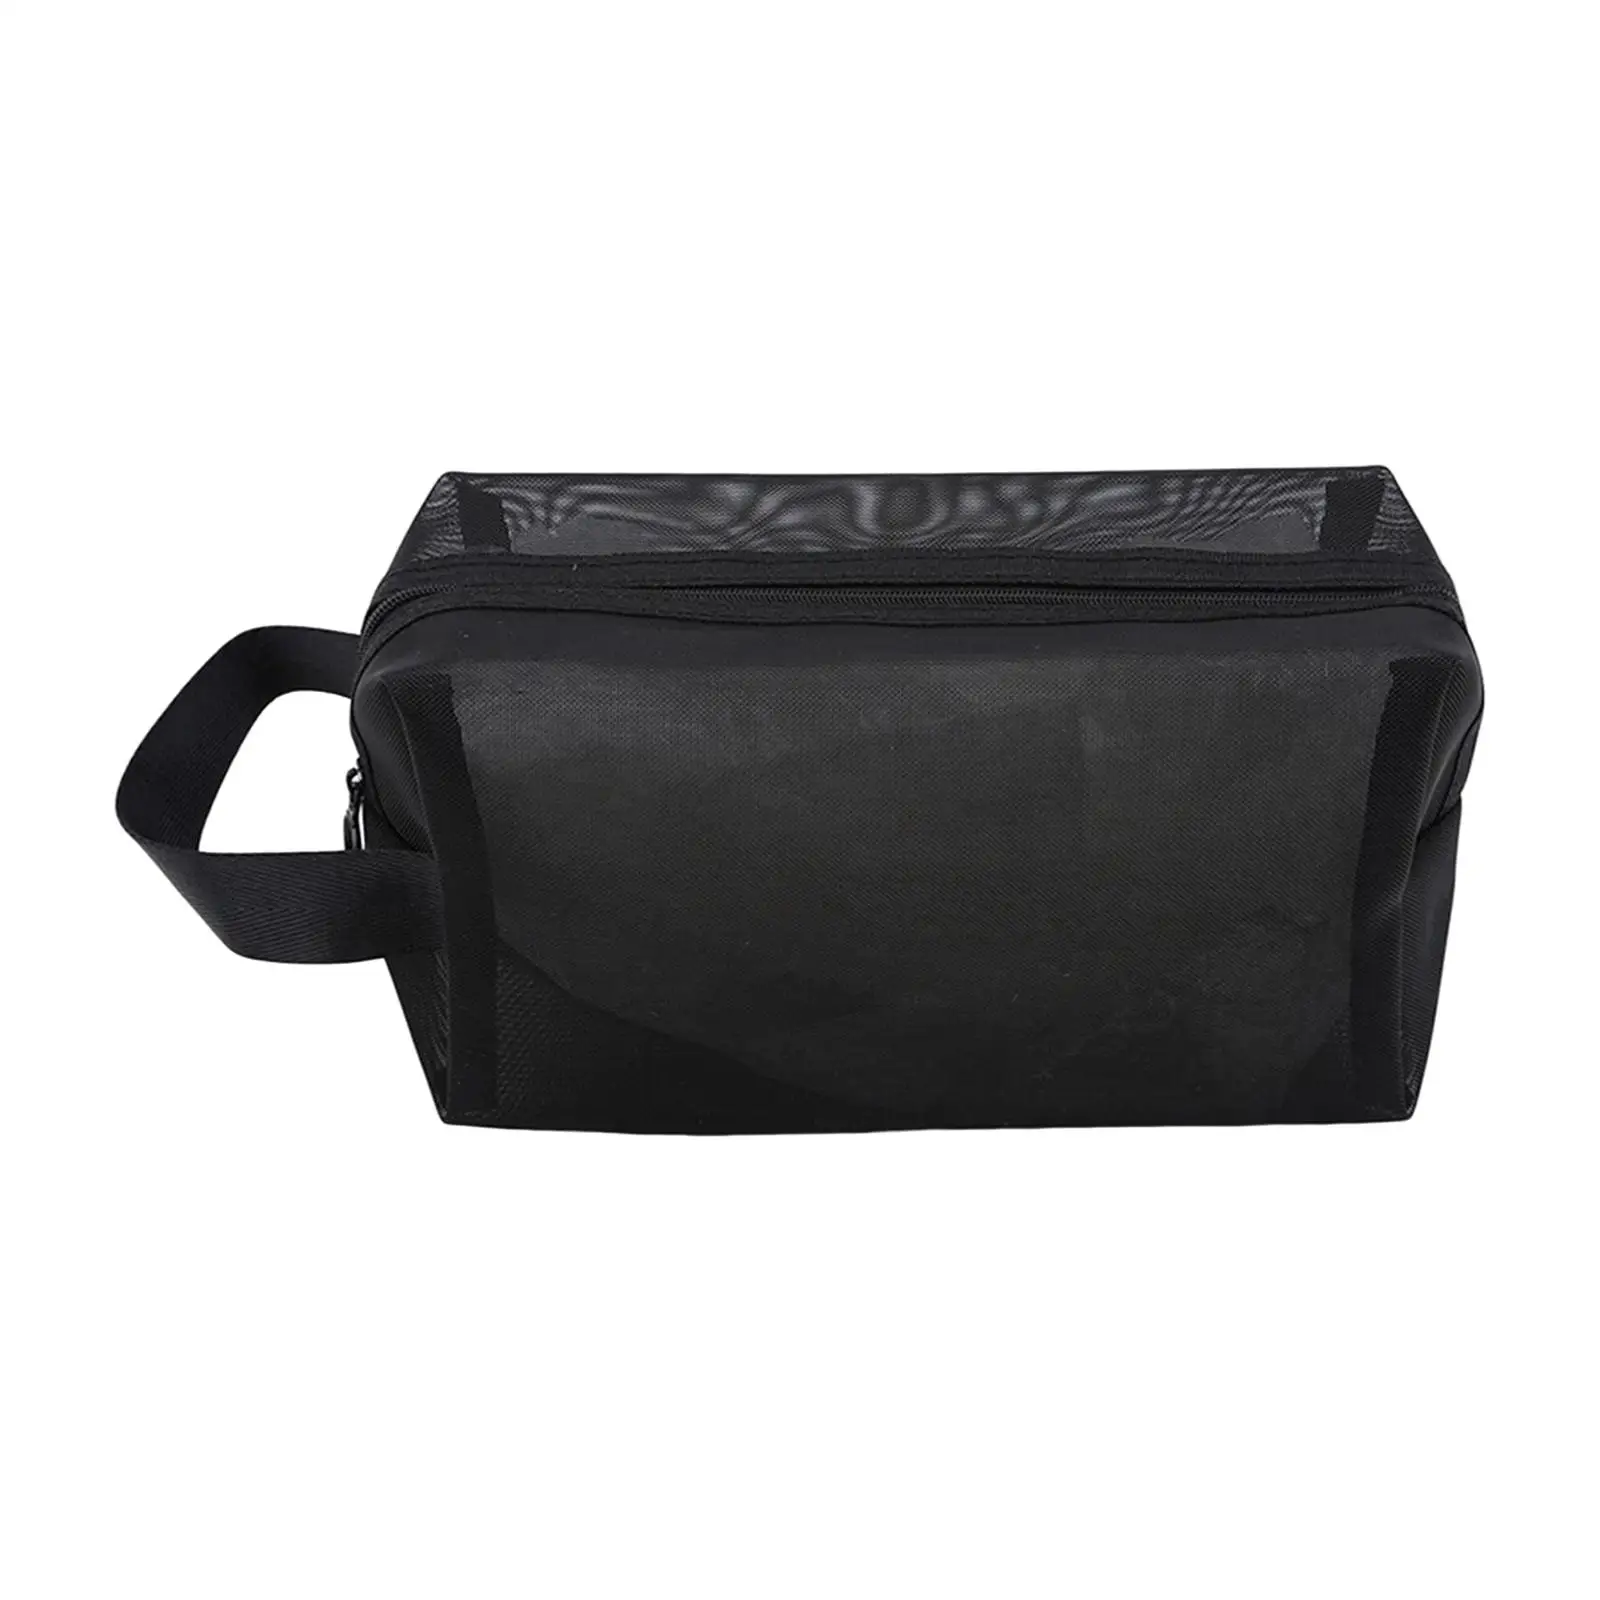 Mesh Cosmetic Bag Multifunction Portable Black for Accessories Bathroom